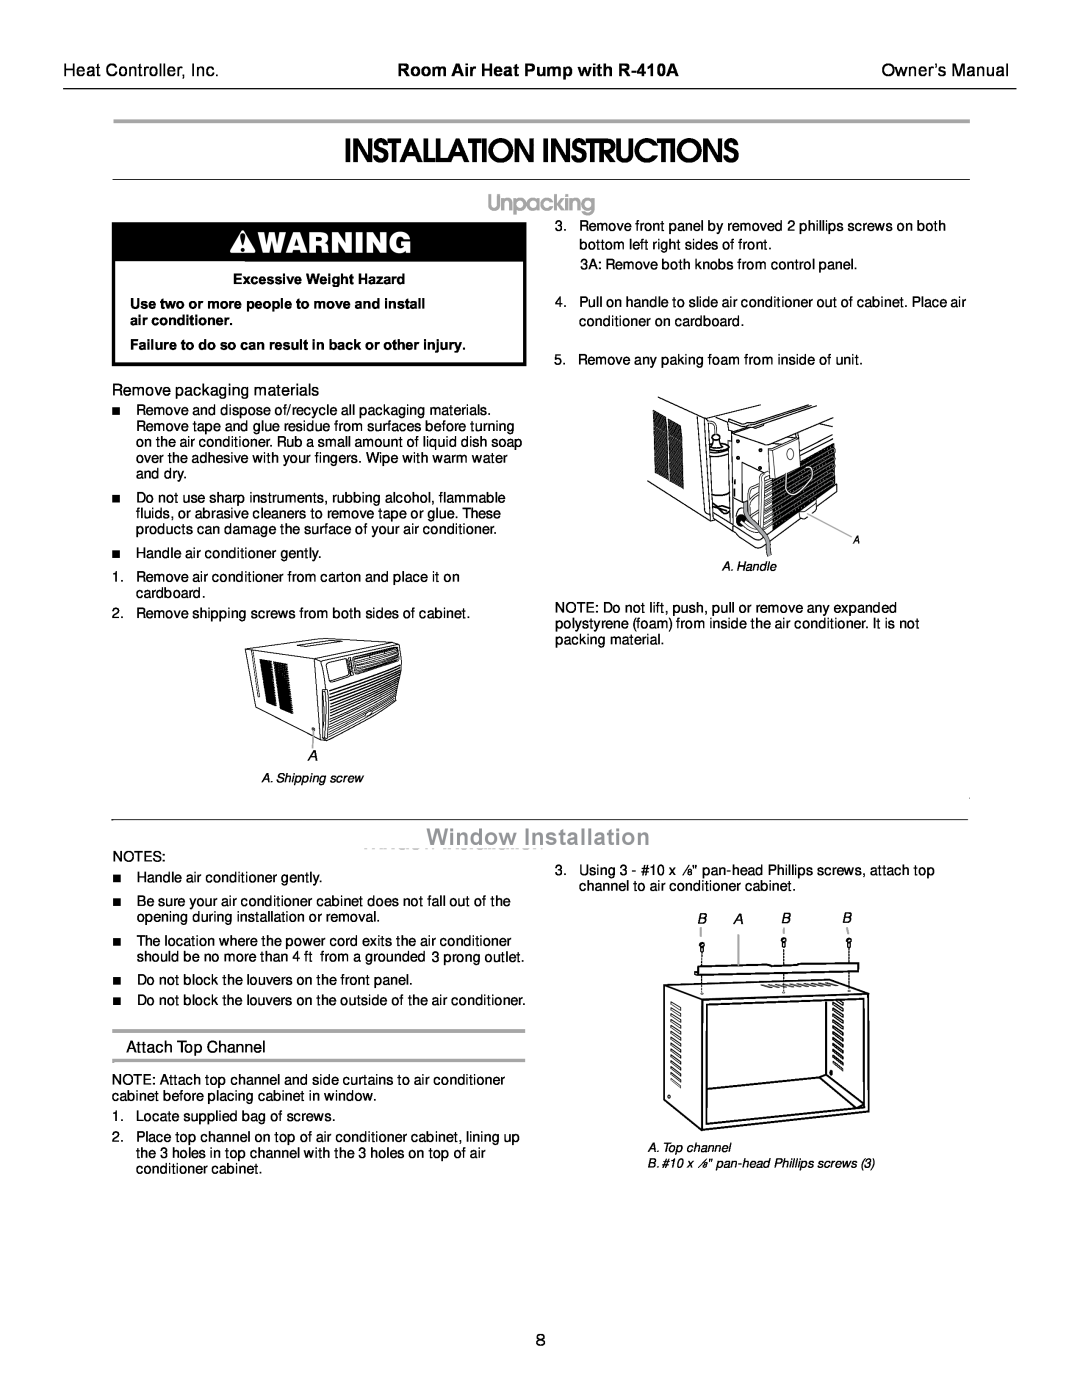 Heat Controller RAH-123G Installation Instructions, Unpacking, Heat Controller, Inc, Room Air Heat Pump with R-410A 